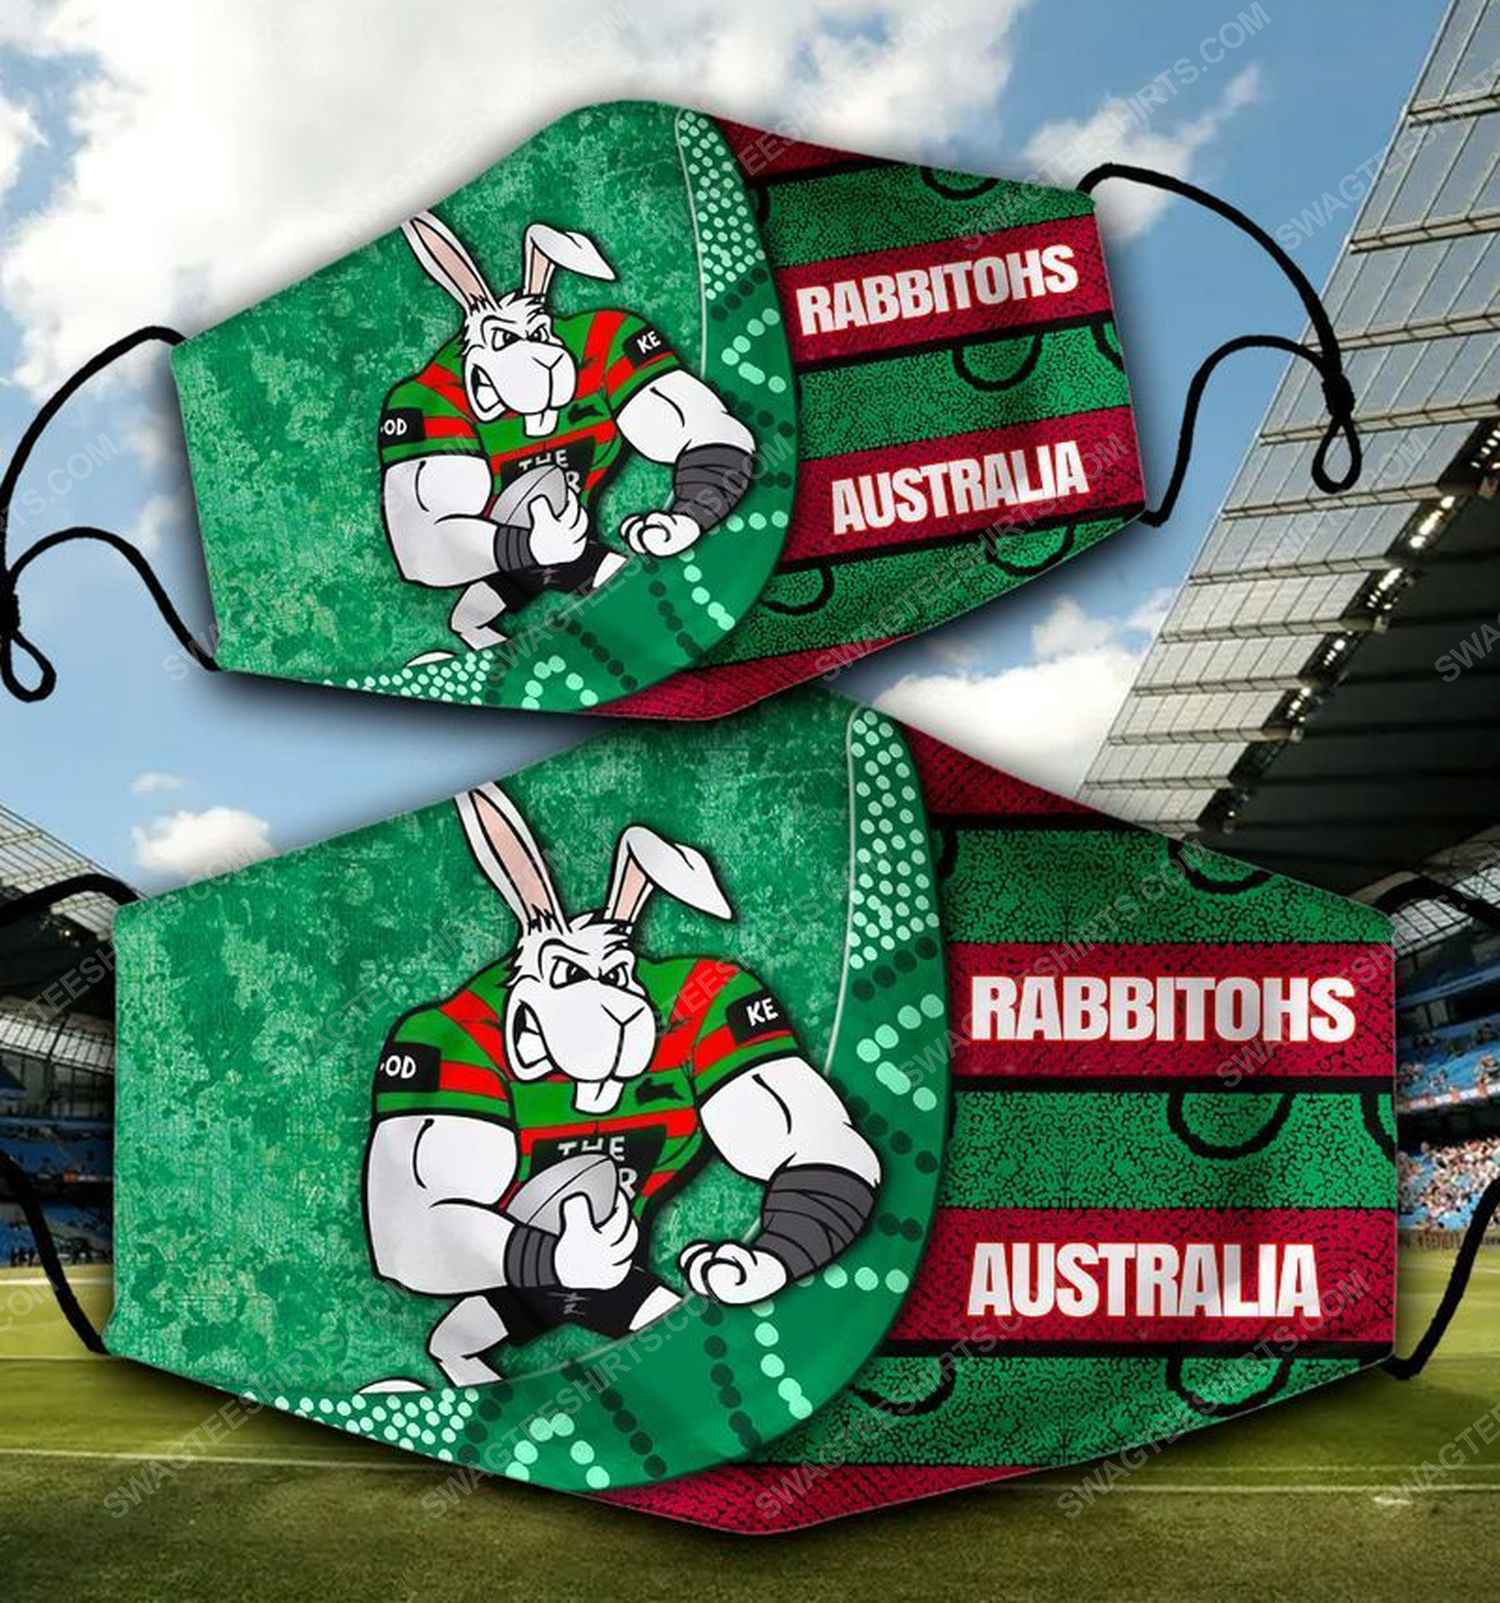 [special edition] South sydney rabbitohs football club face mask- maria